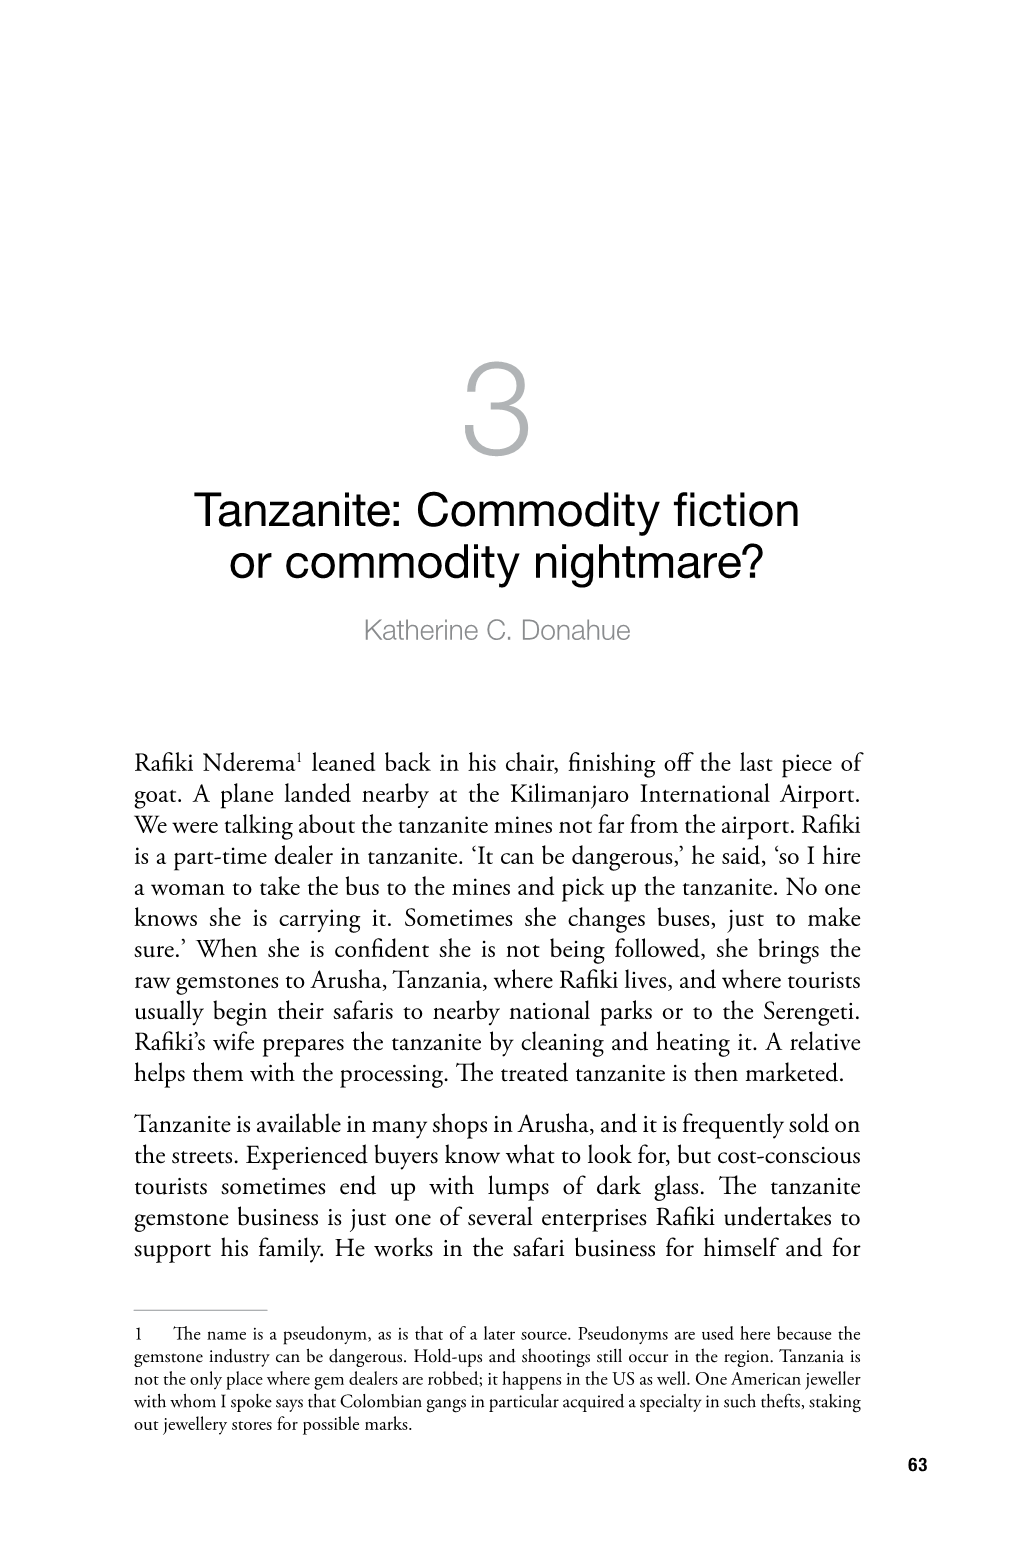 Tanzanite: Commodity Fiction Or Commodity Nightmare? Katherine C